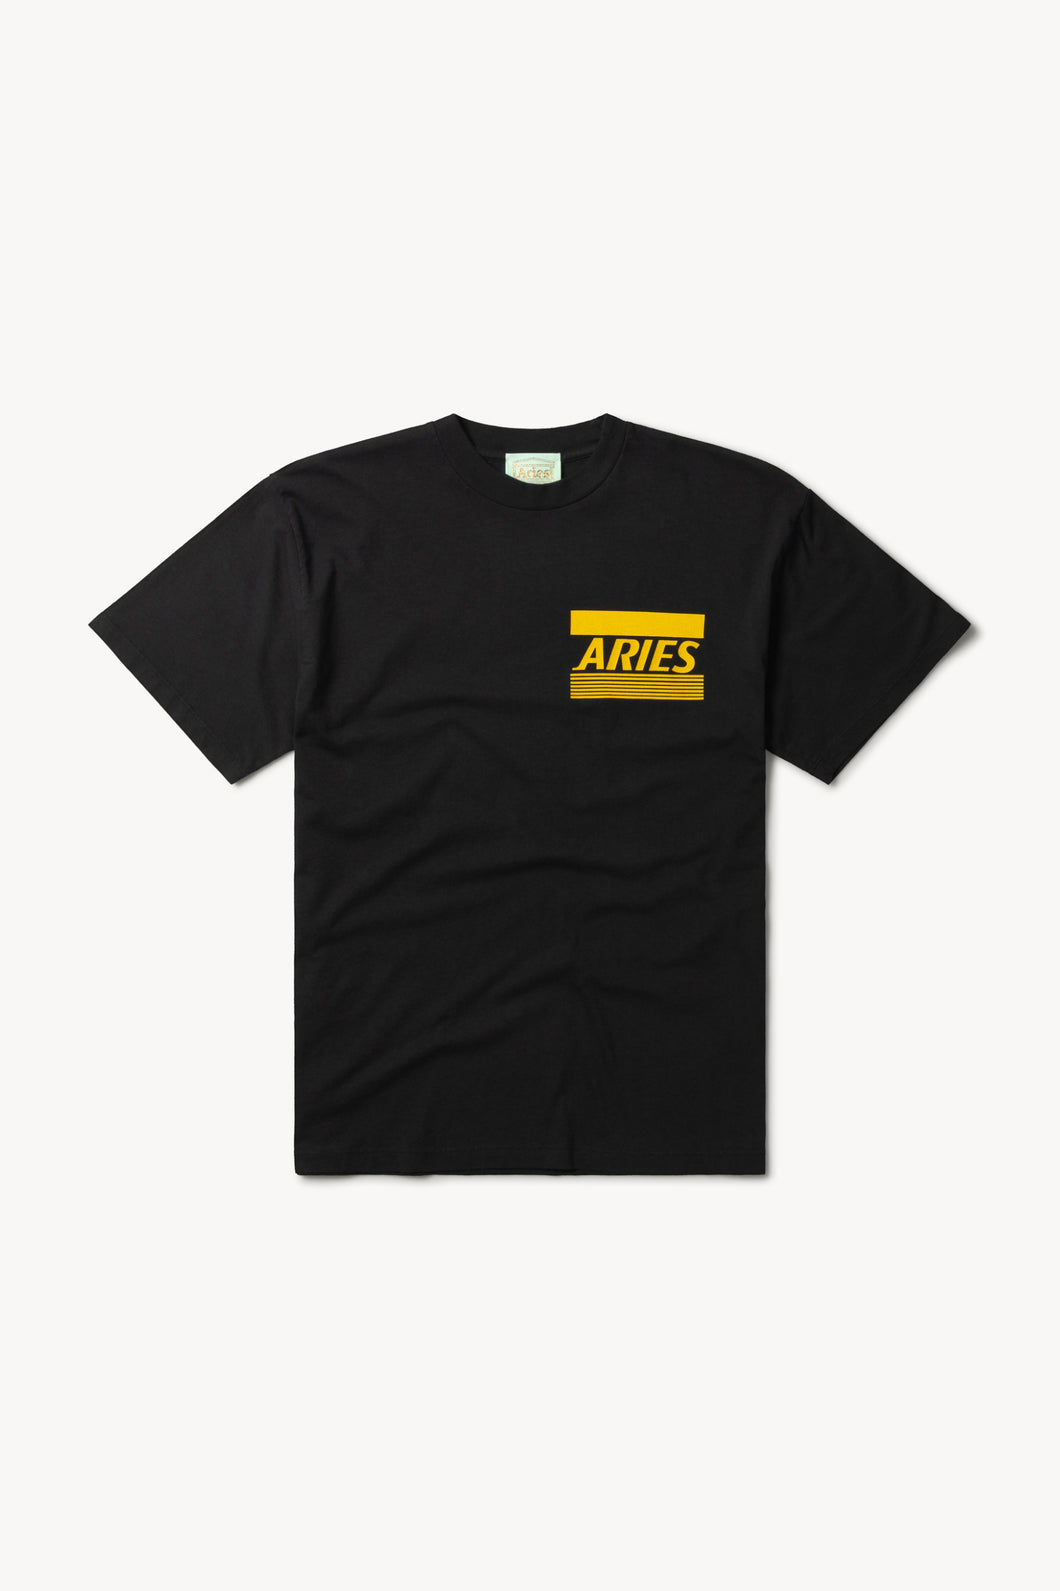 T-shirt Aries Black size L International in Cotton - 28484957